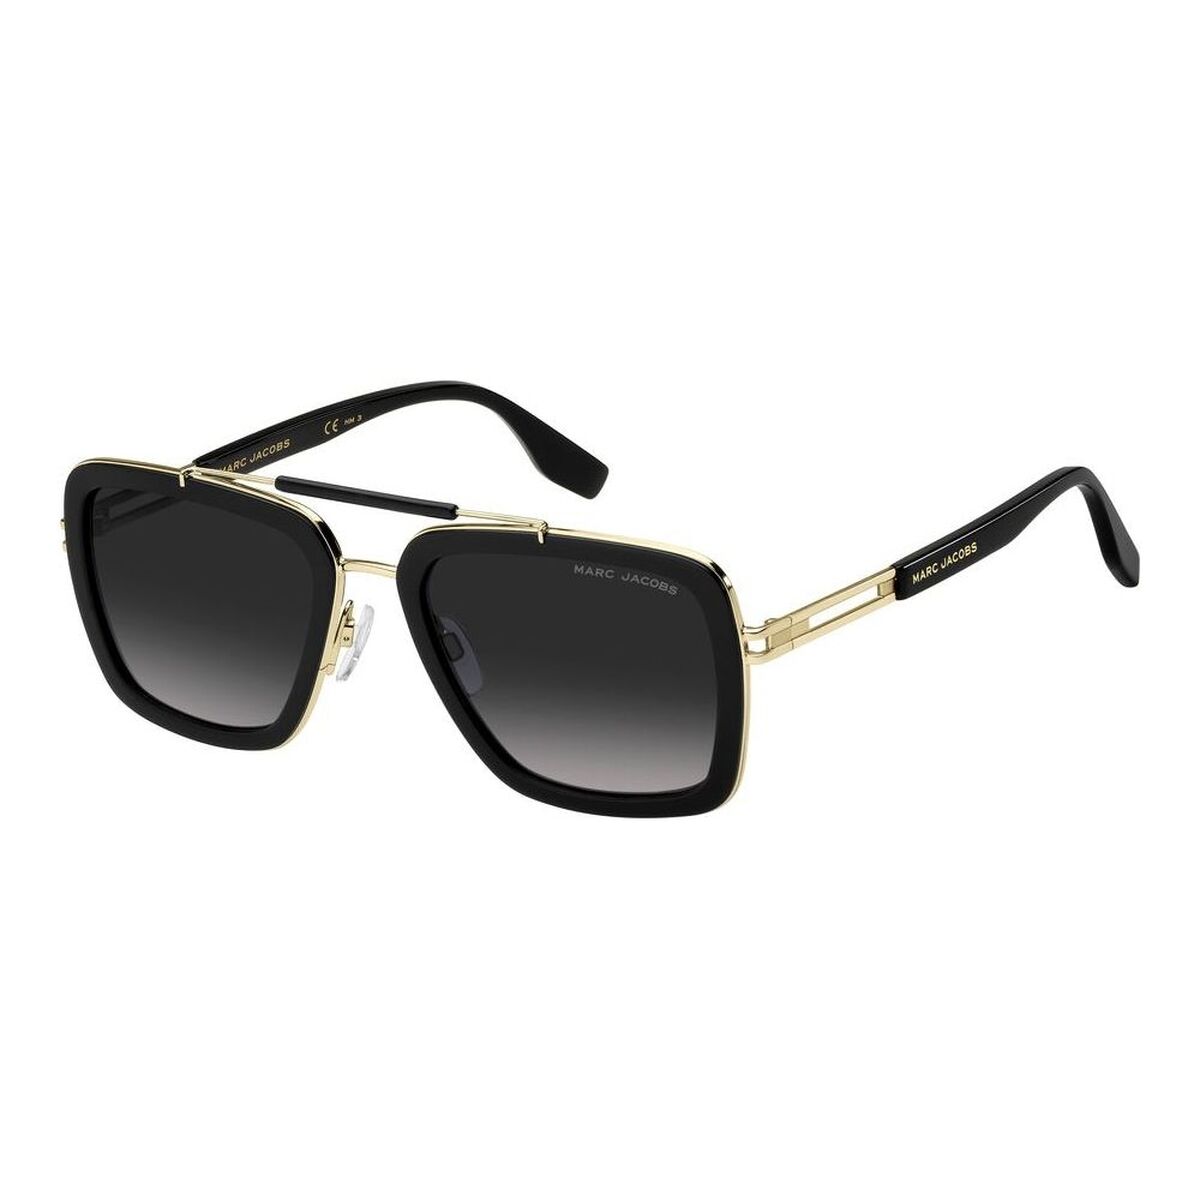 Kaufe Herrensonnenbrille Marc Jacobs MARC 674_S bei AWK Flagship um € 259.00